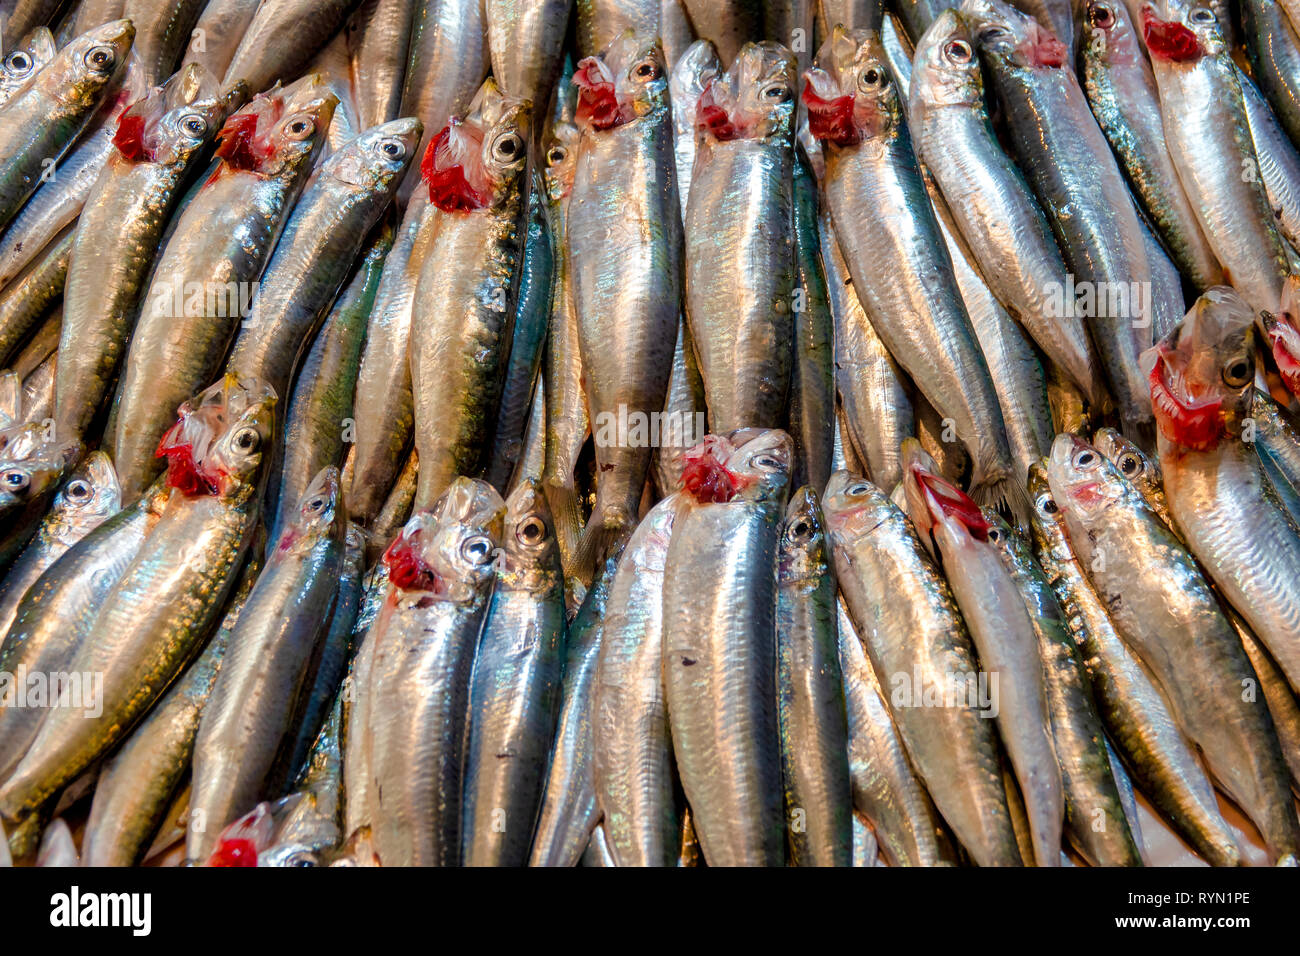 European pilchard on display in the Fish market in the Kemeraltı bazaar, Izmir, Turkey Stock Photo